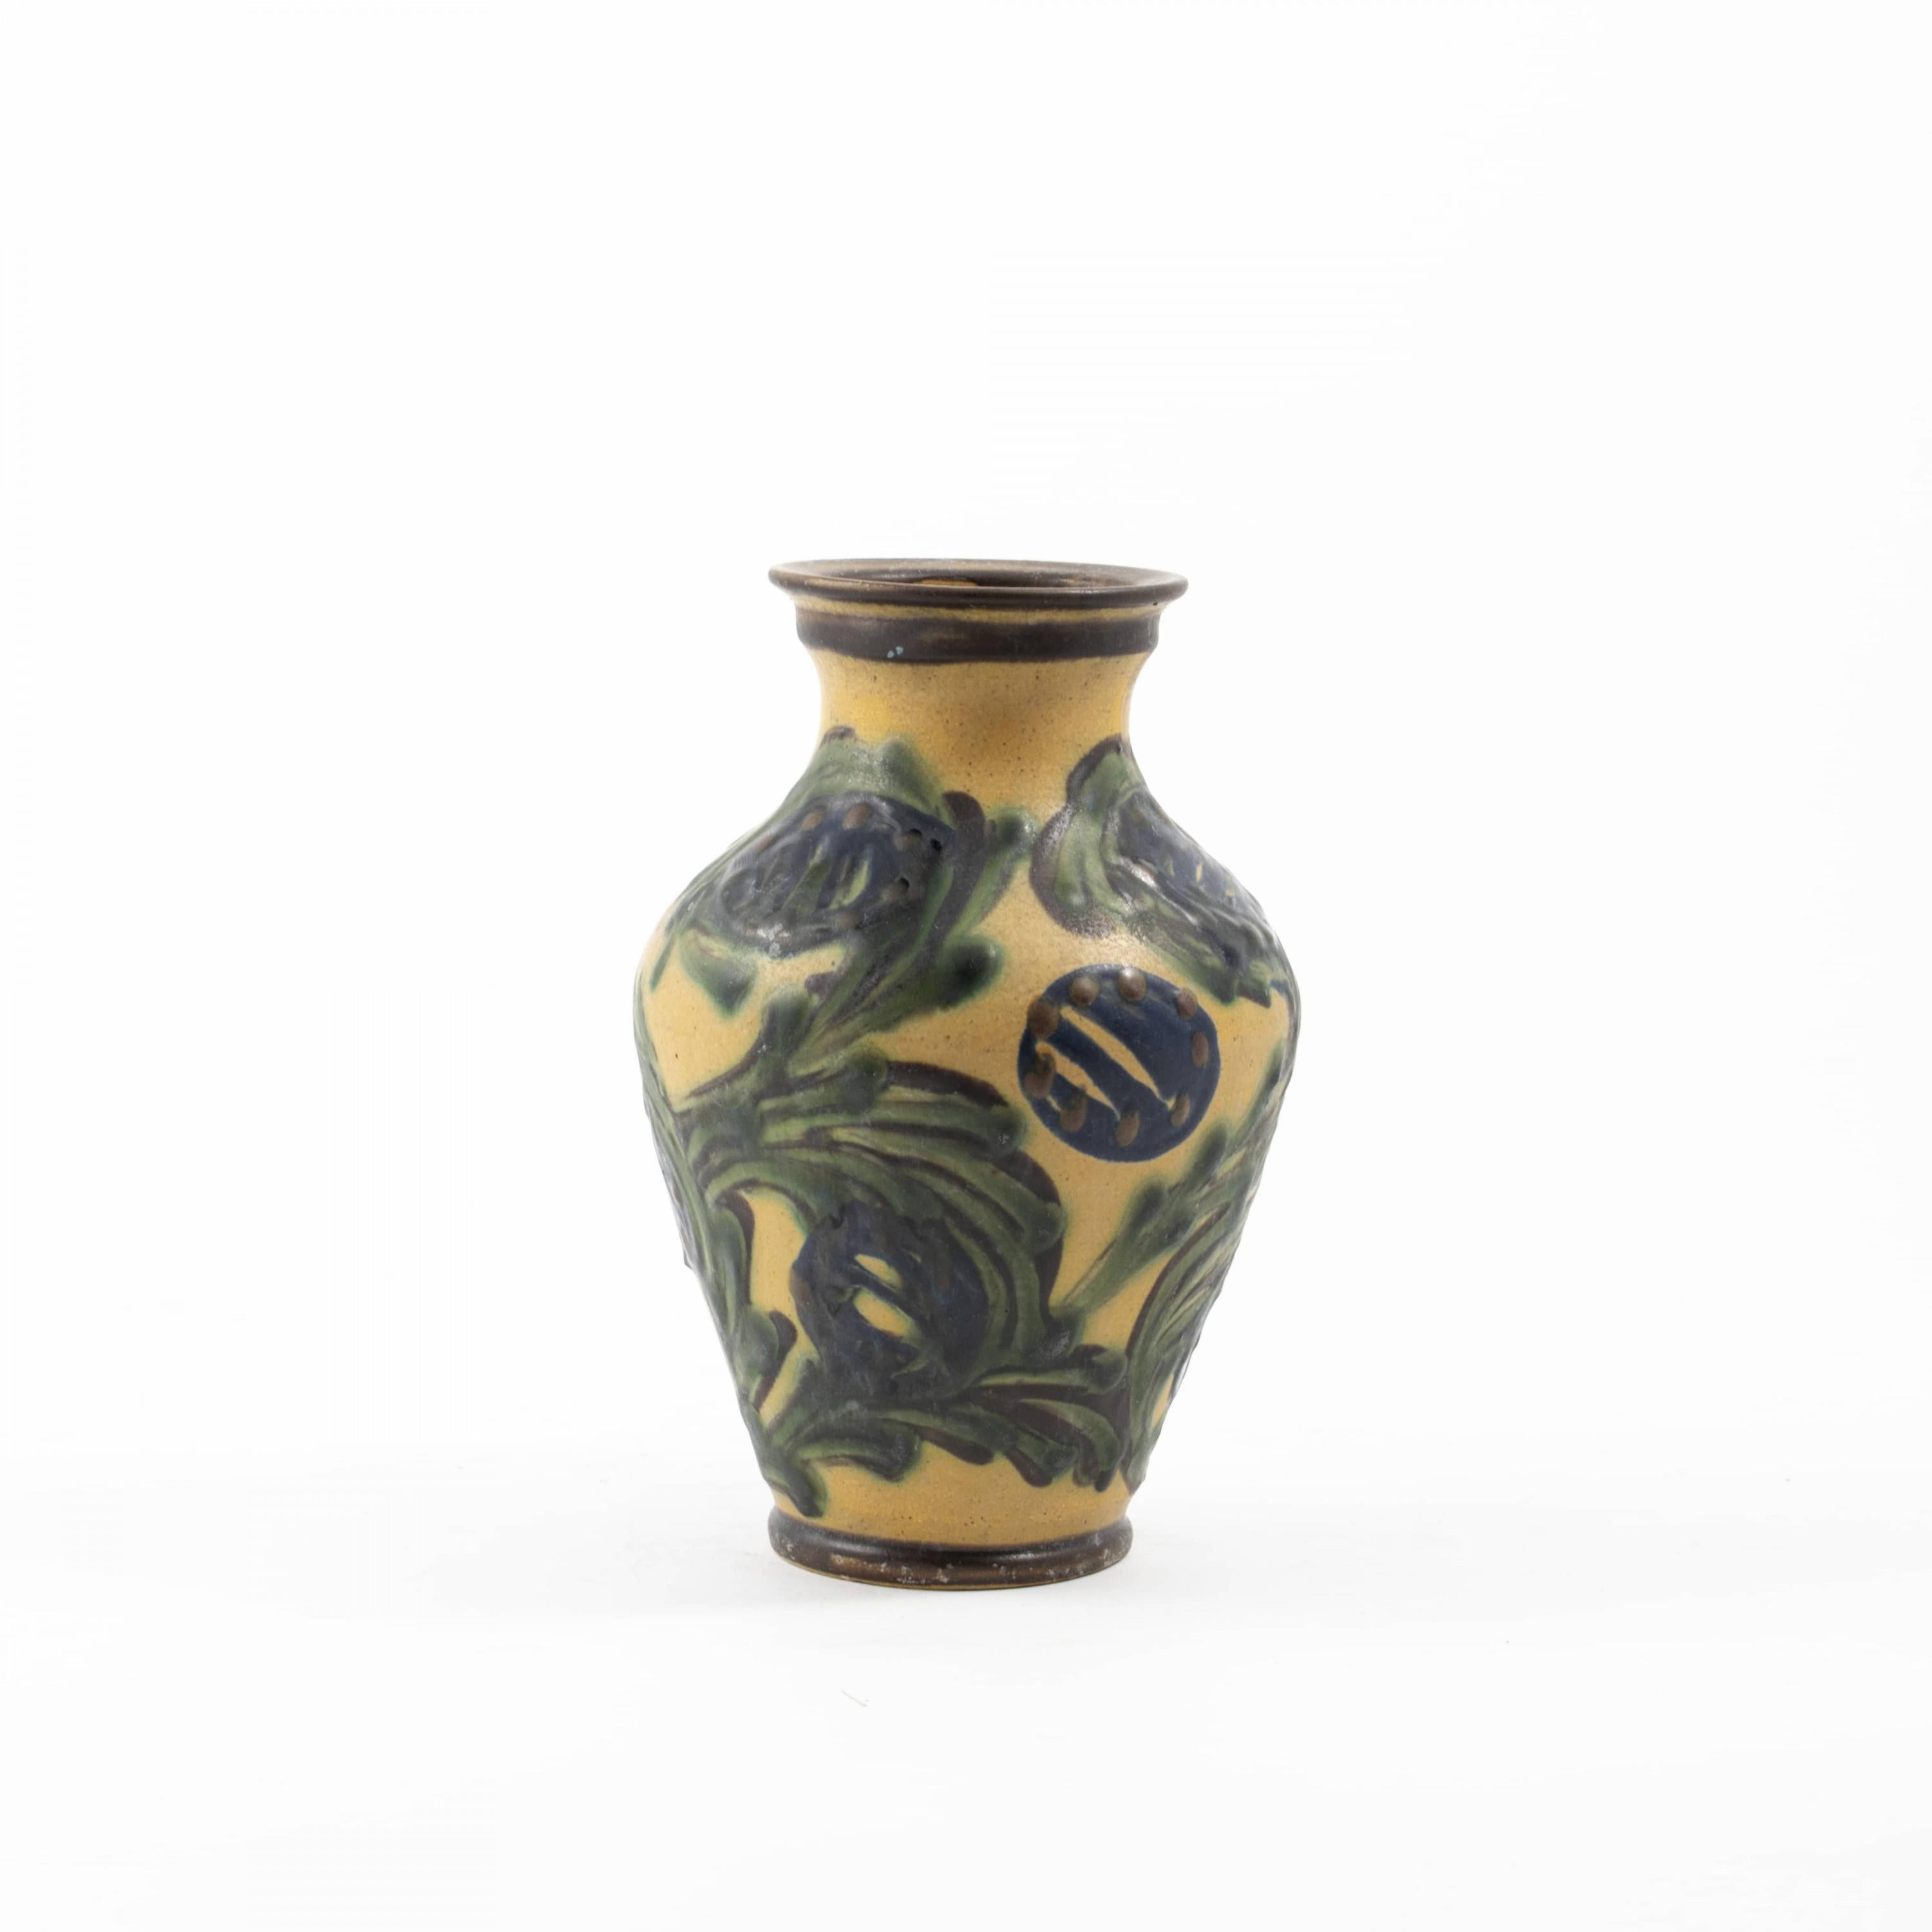 Kähler ceramic vase.
Polychrome matt glaze with leaf work on a yellow base.

Signed: HÄK (Herman A. Kähler).